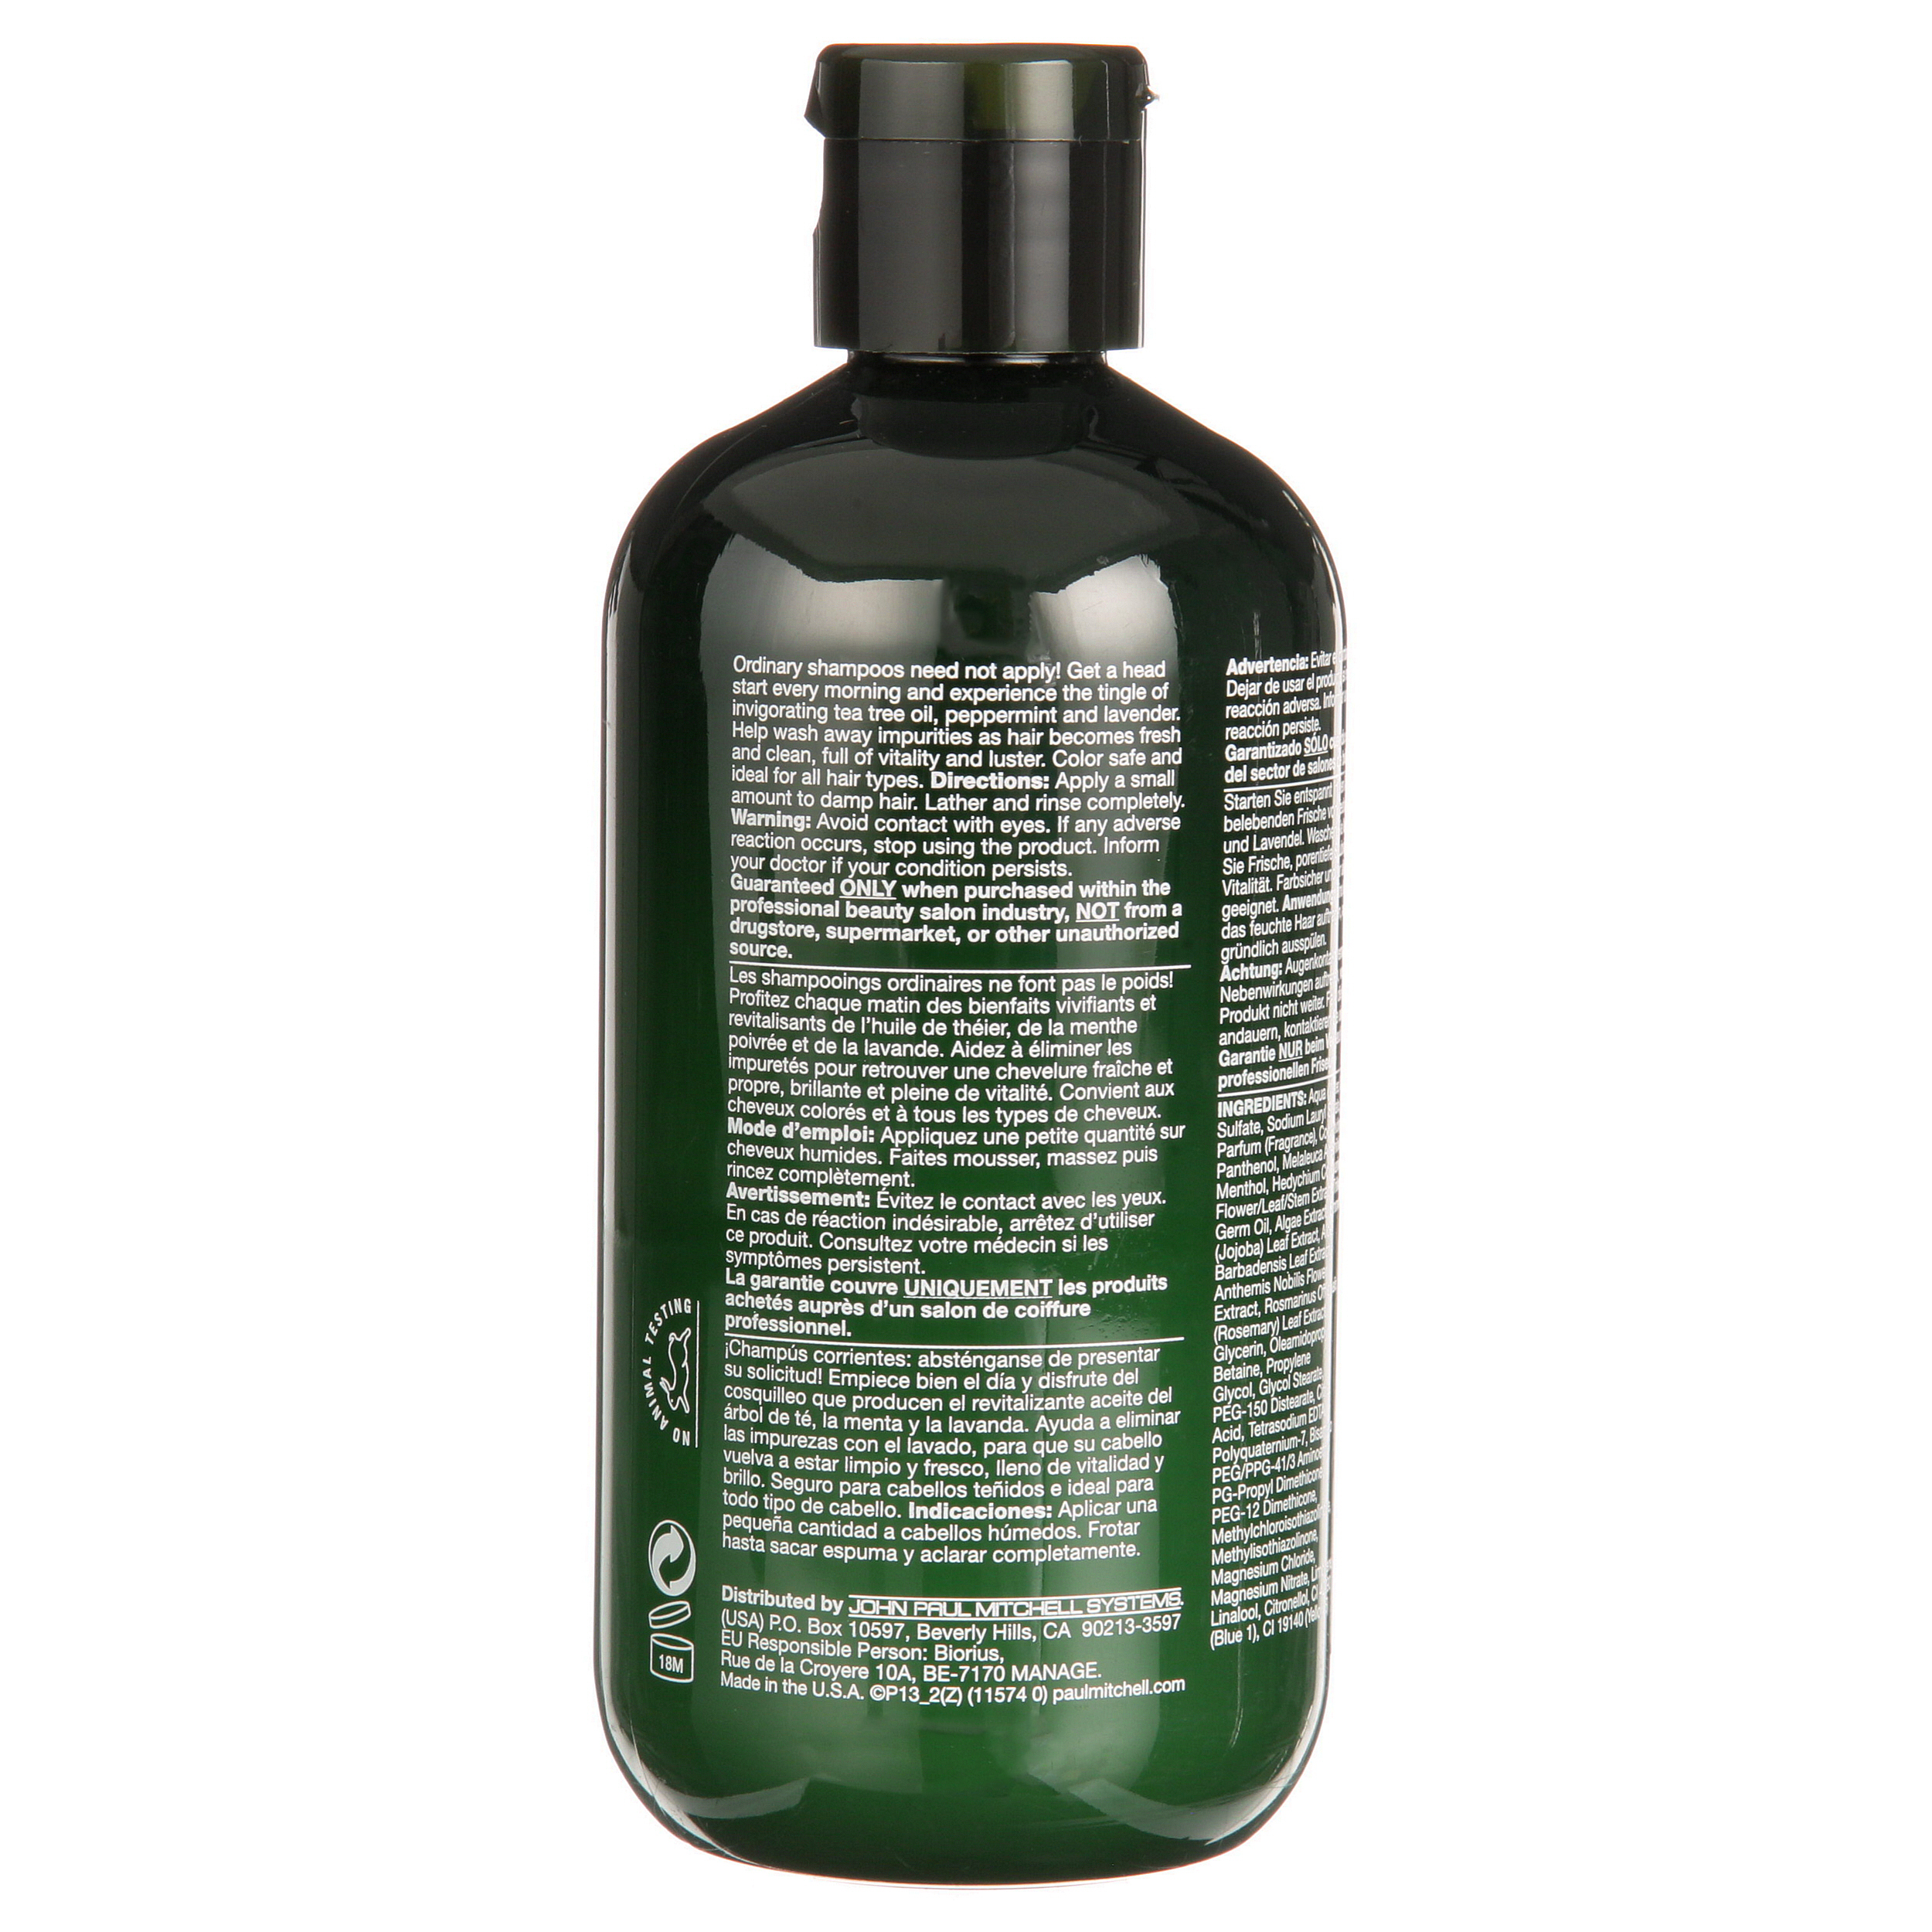 Paul Mitchell Moisturizing & Shine Enhancing Daily Shampoo with Tea Tree Oil, Scented, 10.14 fl oz - image 4 of 5